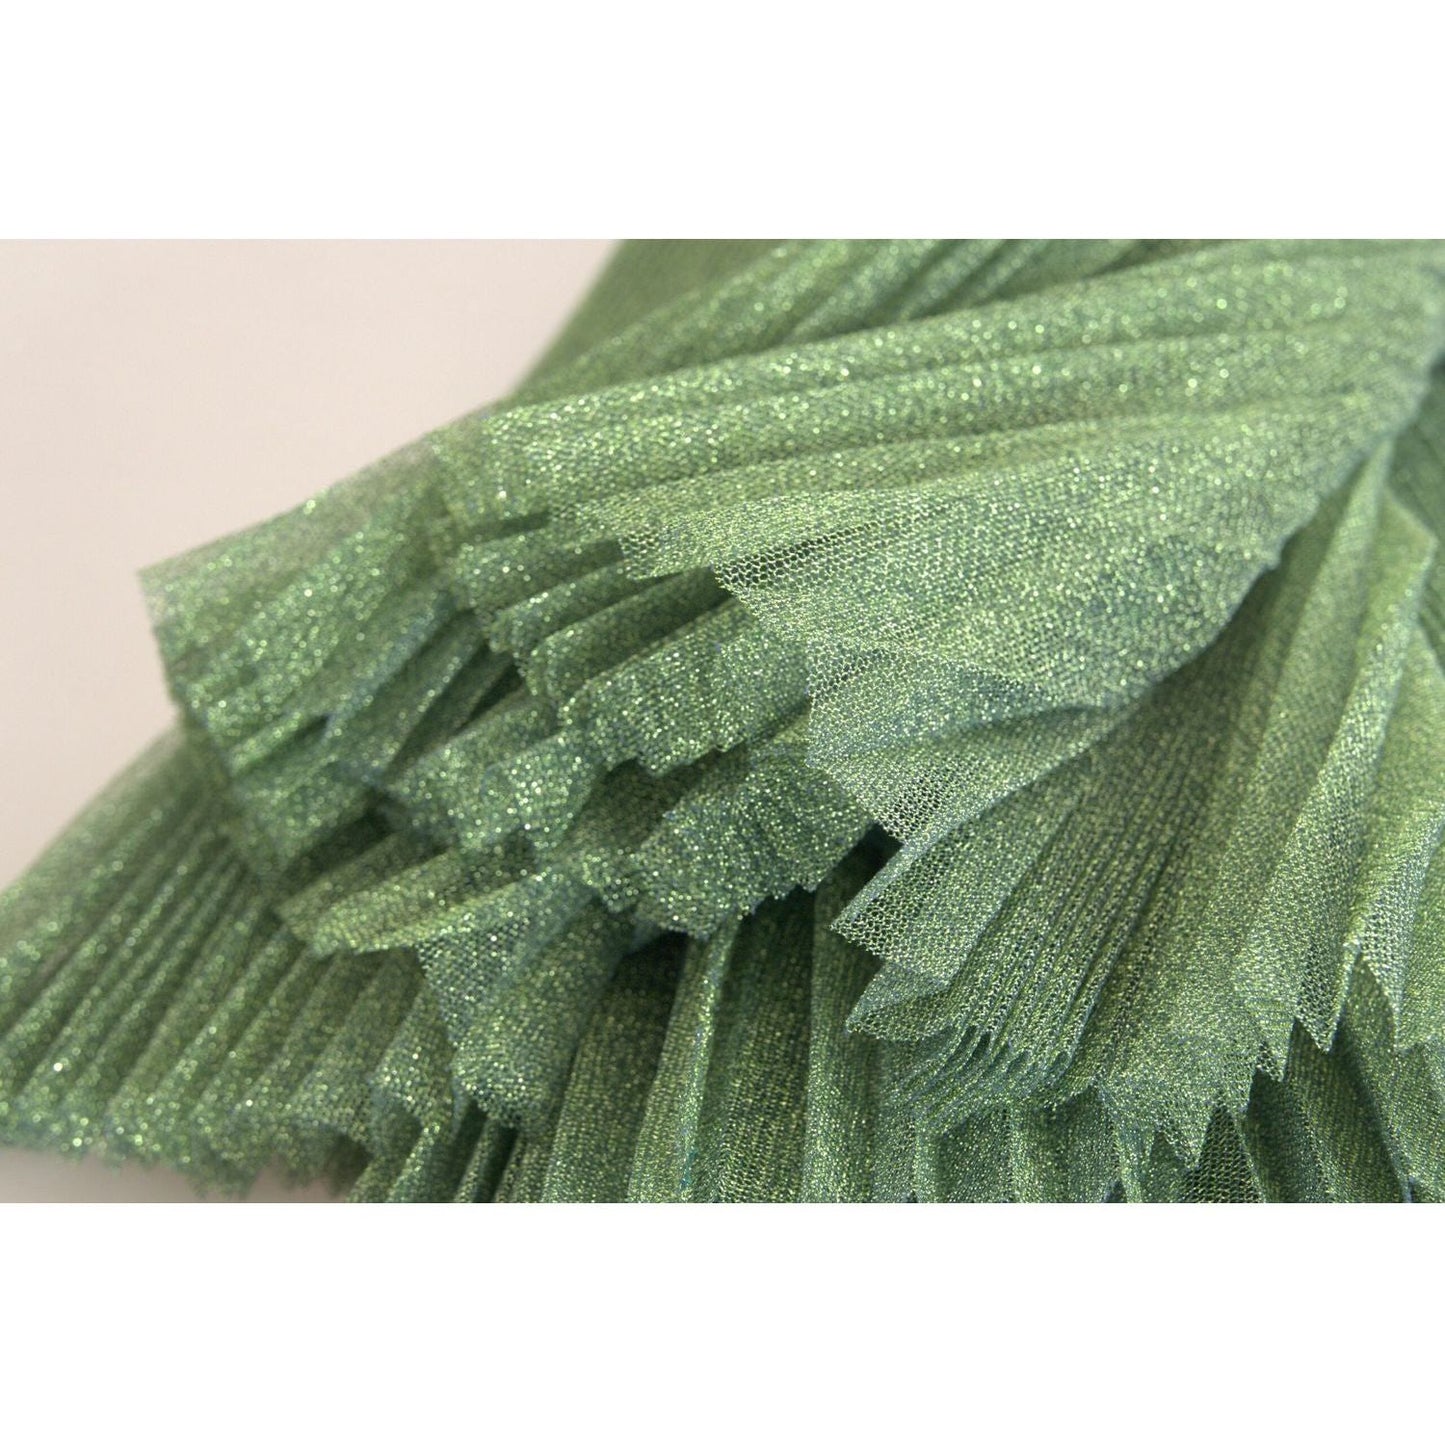 Dolce & Gabbana Enchanting Metallic Green Pleated A-Line Skirt metallic-green-high-waist-a-line-pleated-skirt-1